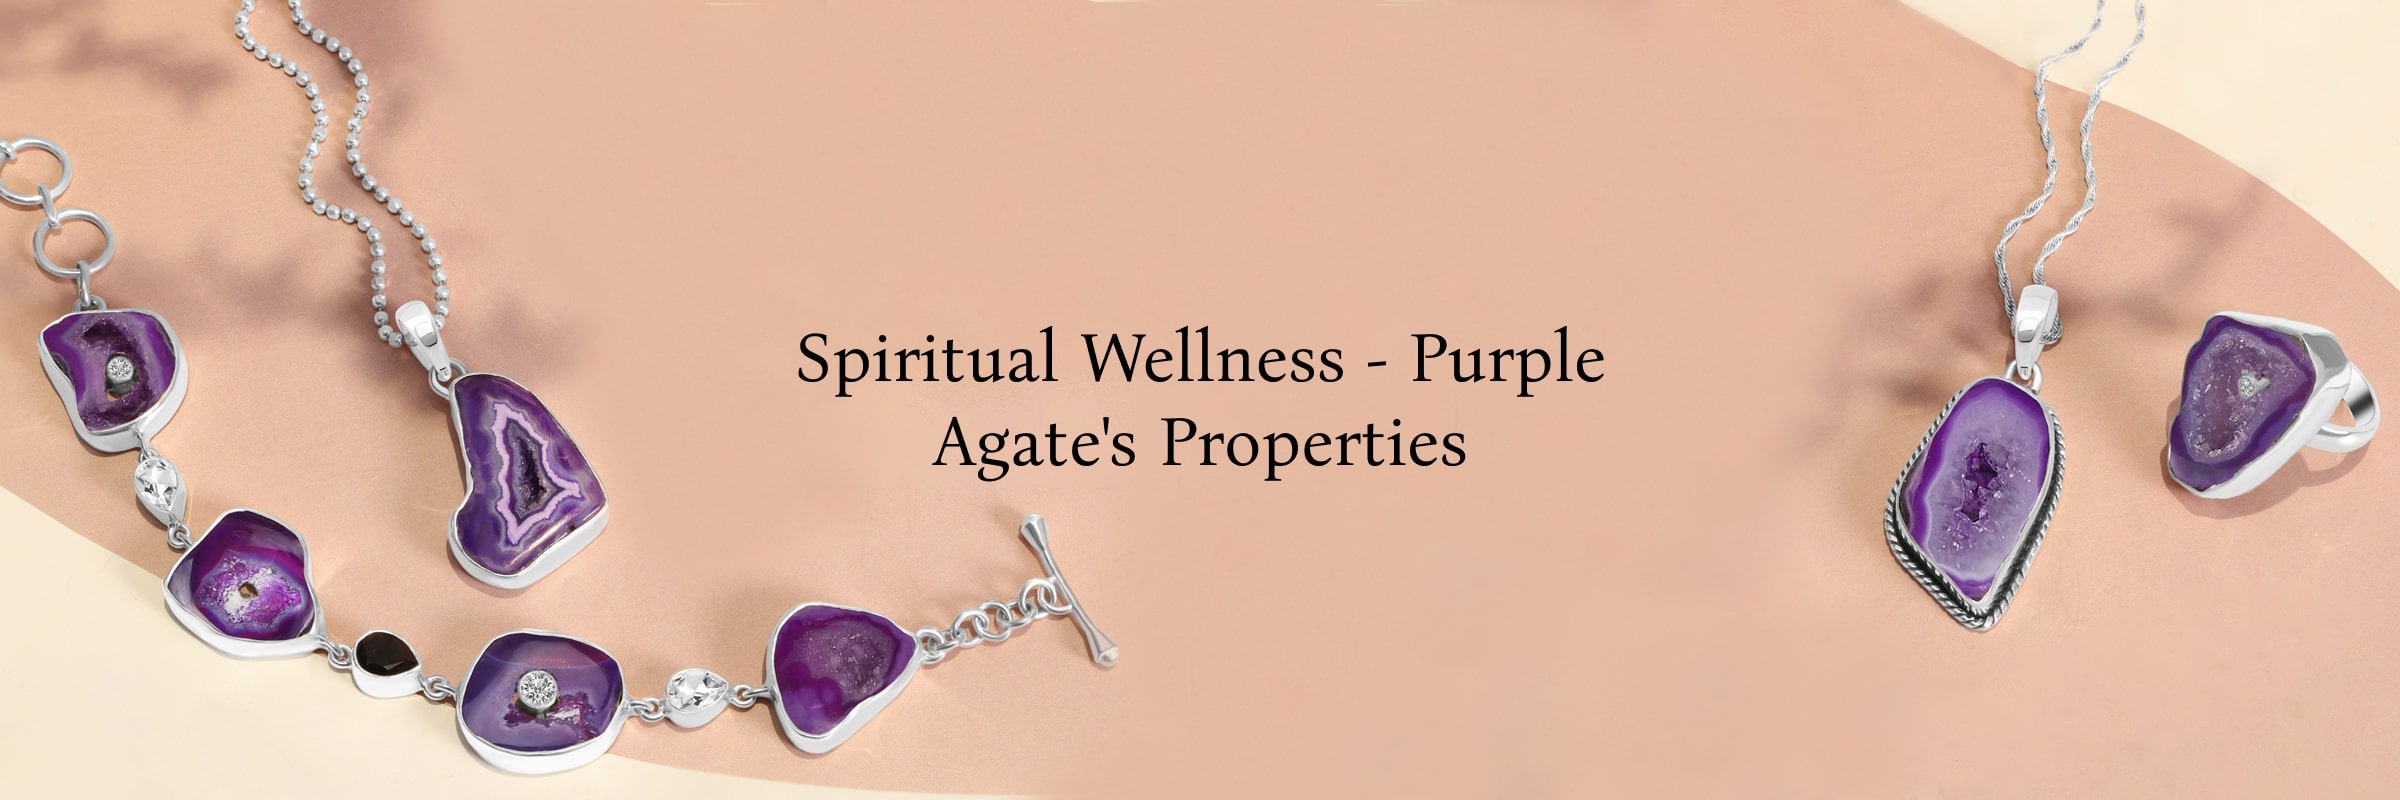 Spiritual Healing Properties